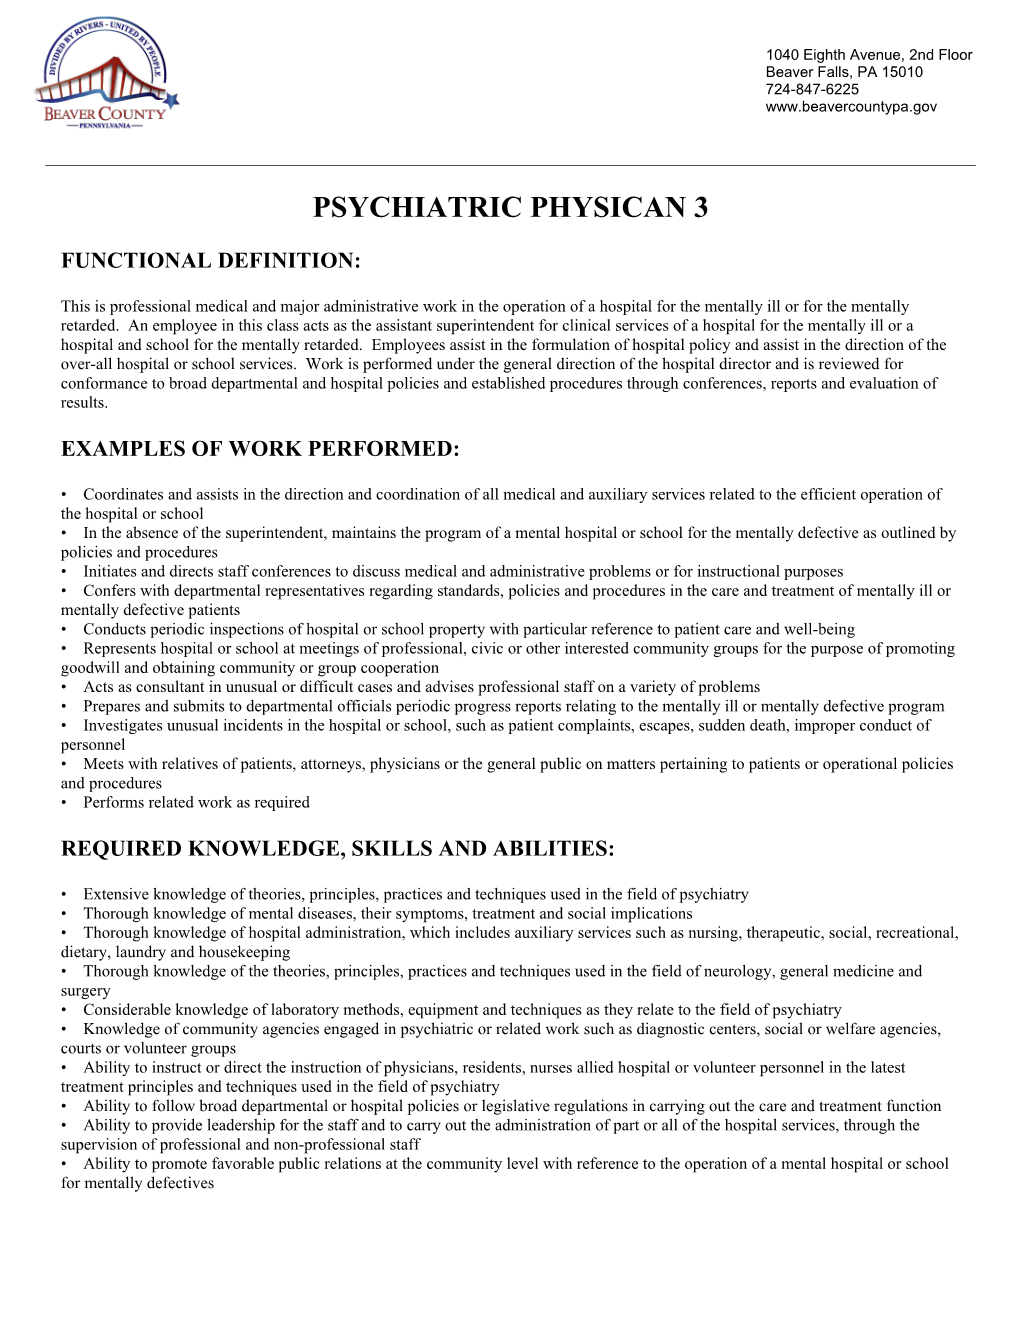 Psychiatric Physican 3